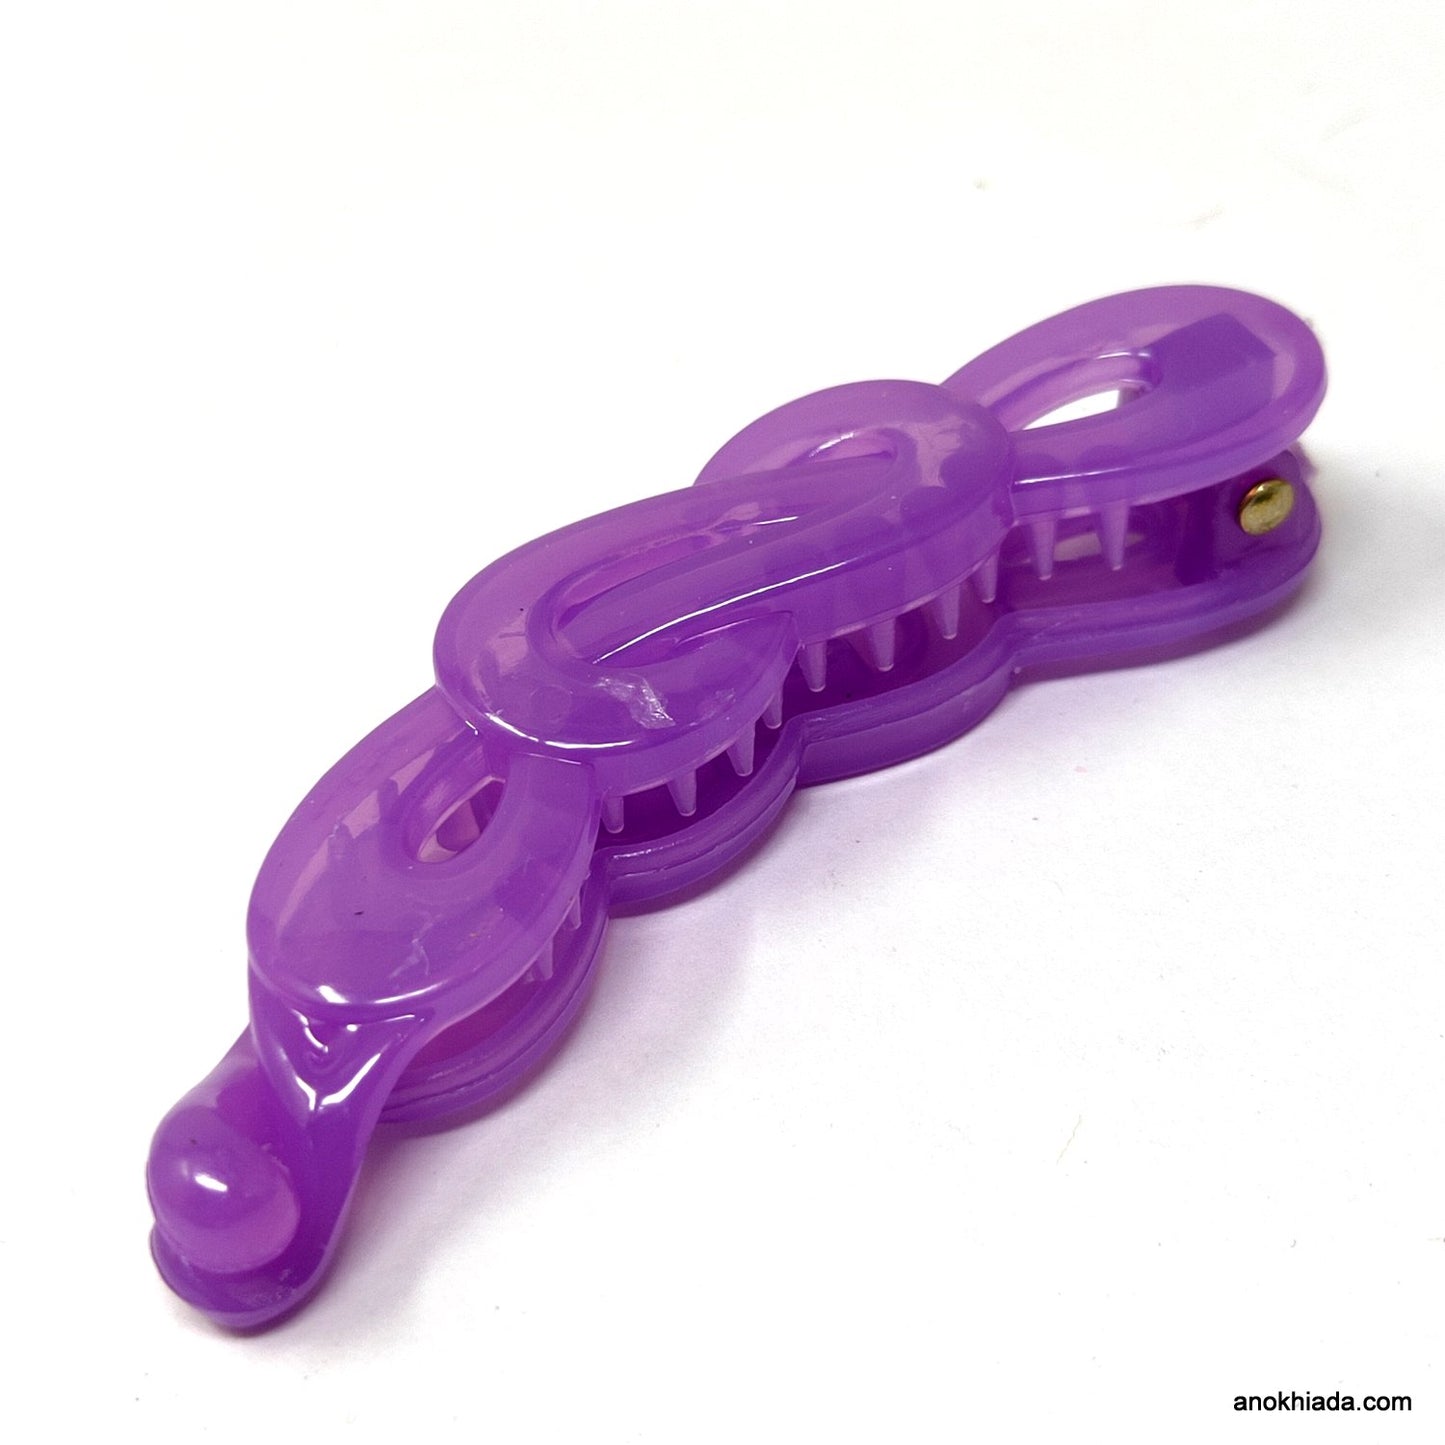 Translucent Infinity Design Small Purple Banana Hair Clip for Girls & Woman (98-14B Banana Hair Clips)